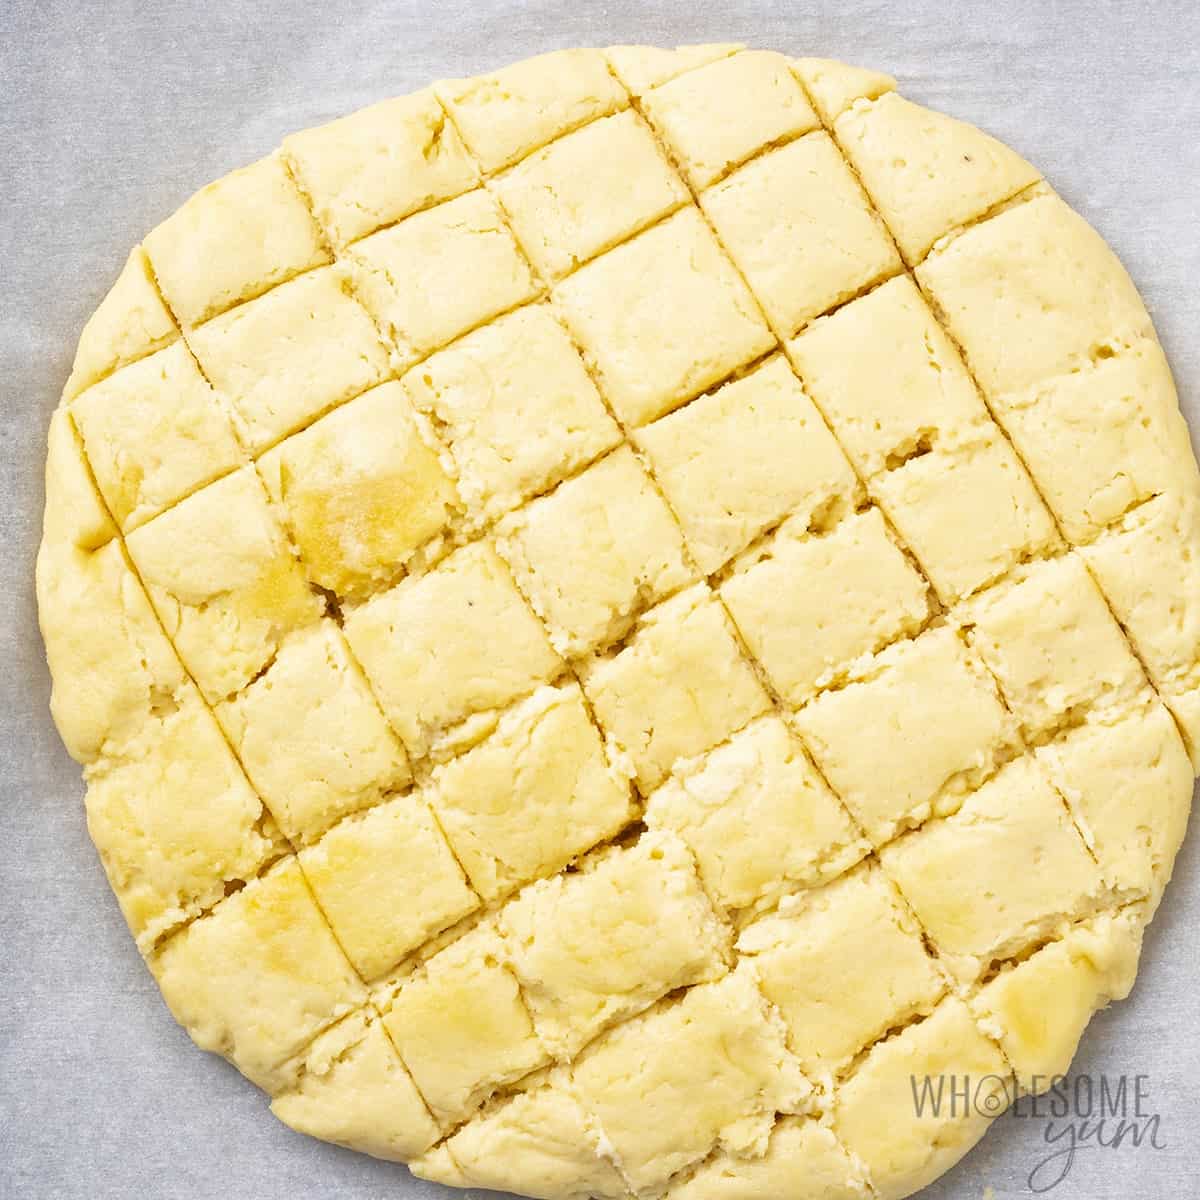 Keto cheesy bread with cut grids.